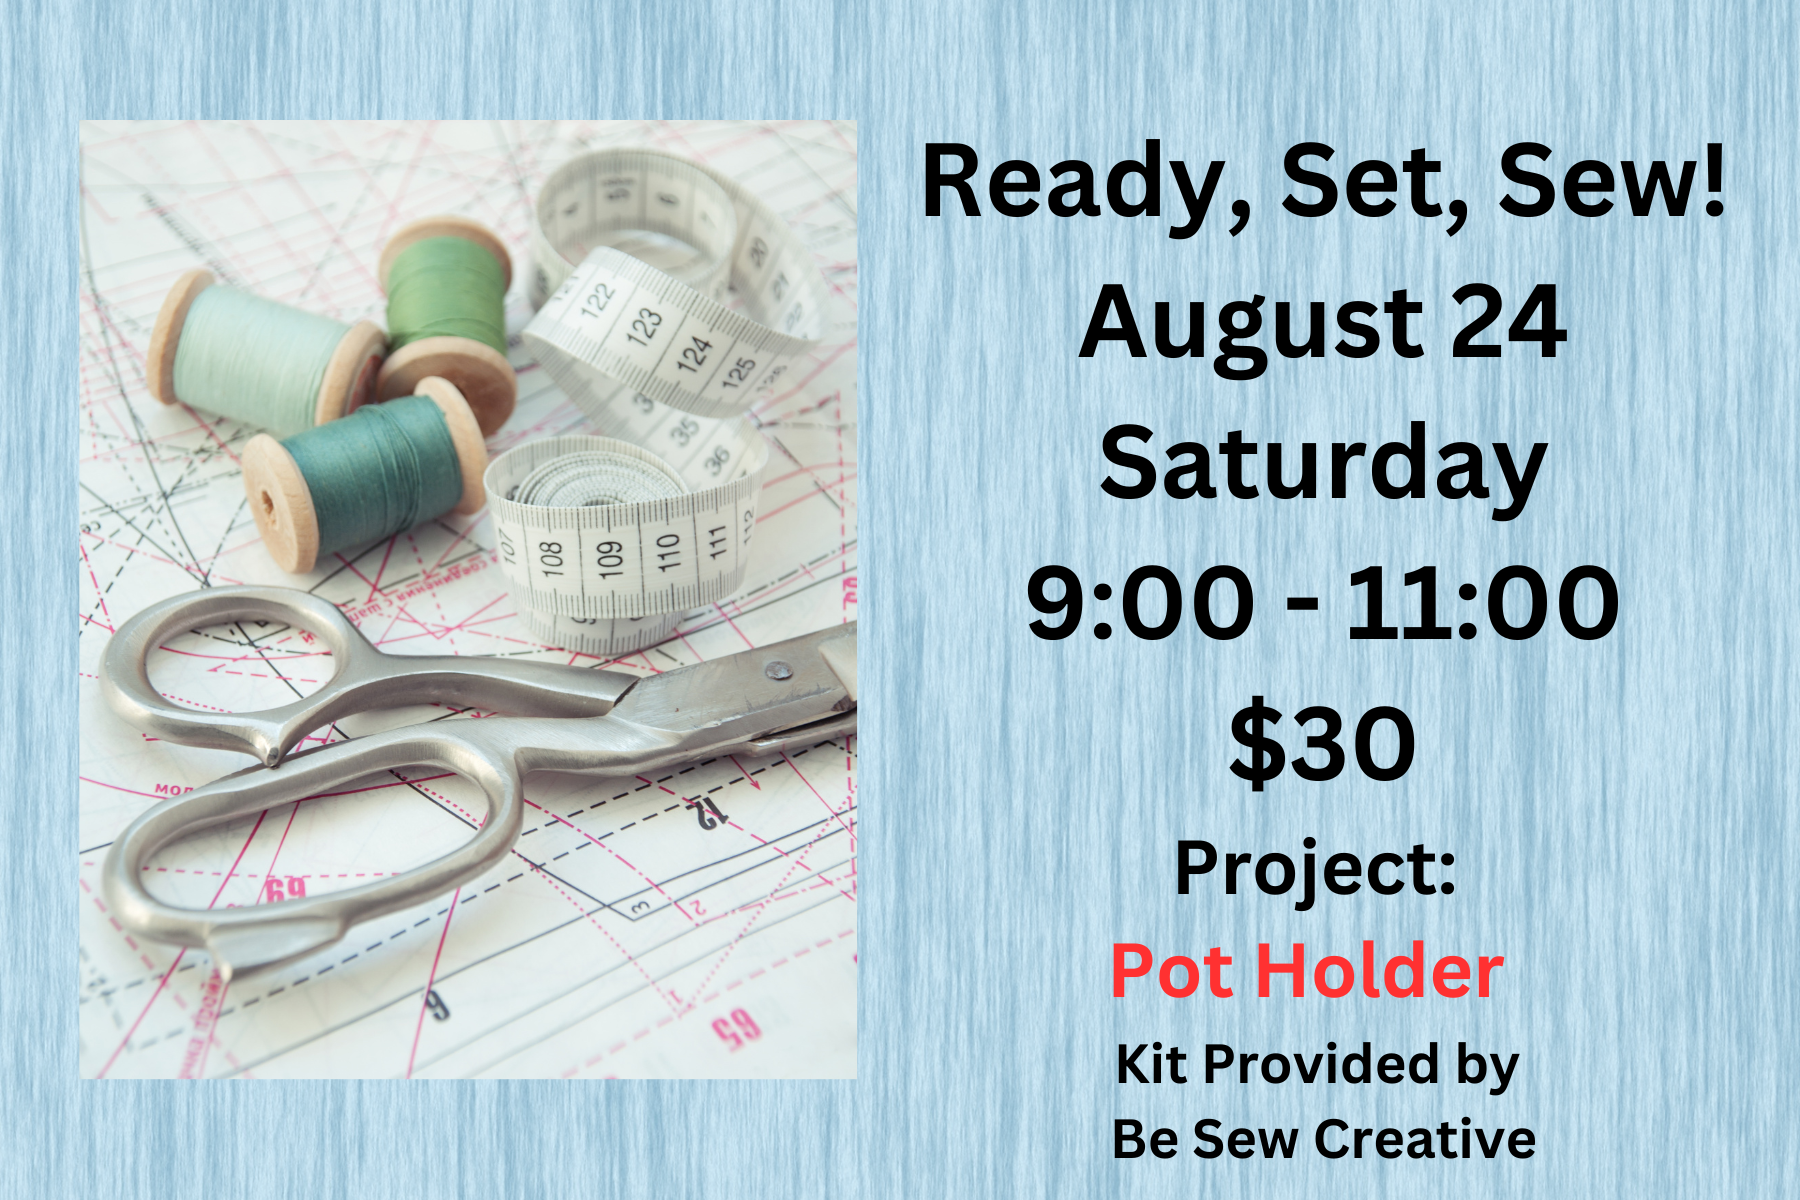 Ready Set Sew - August 24 - Pot Holder 9:00 - 11:00